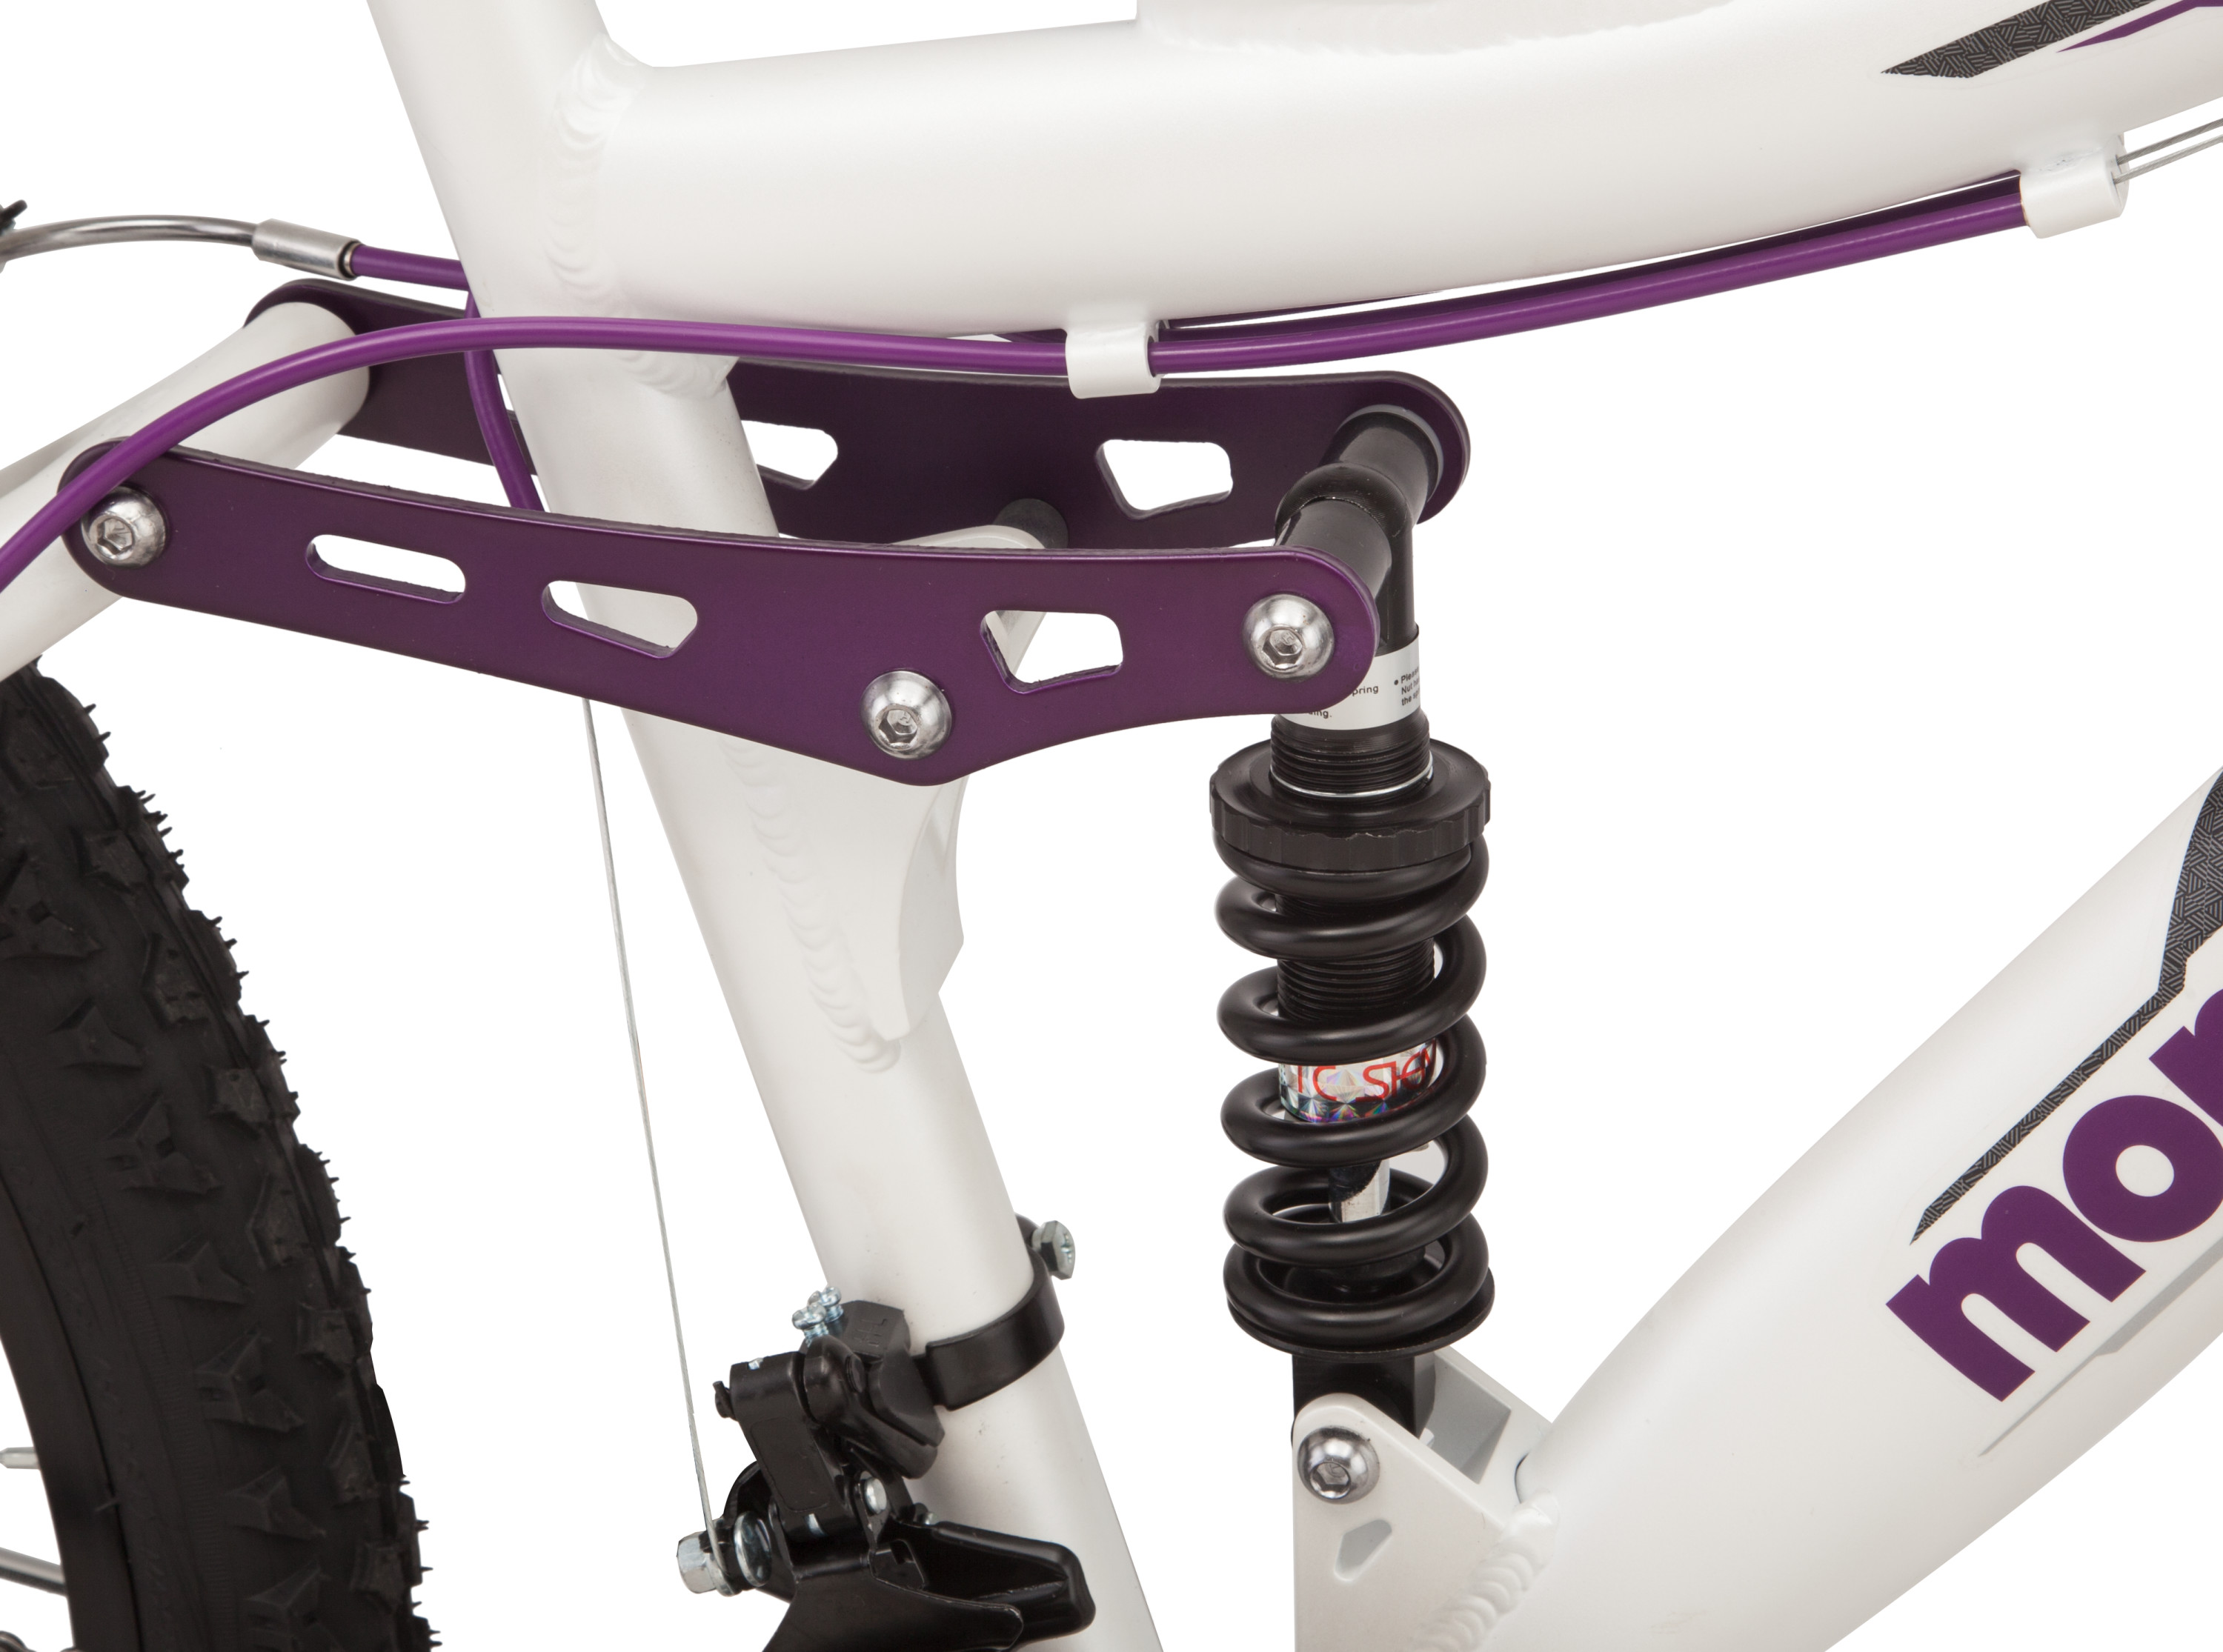 Mongoose Ledge 2.1 Mountain Bike, 26-inch wheels, 21 speeds, womens frame, white - image 2 of 7